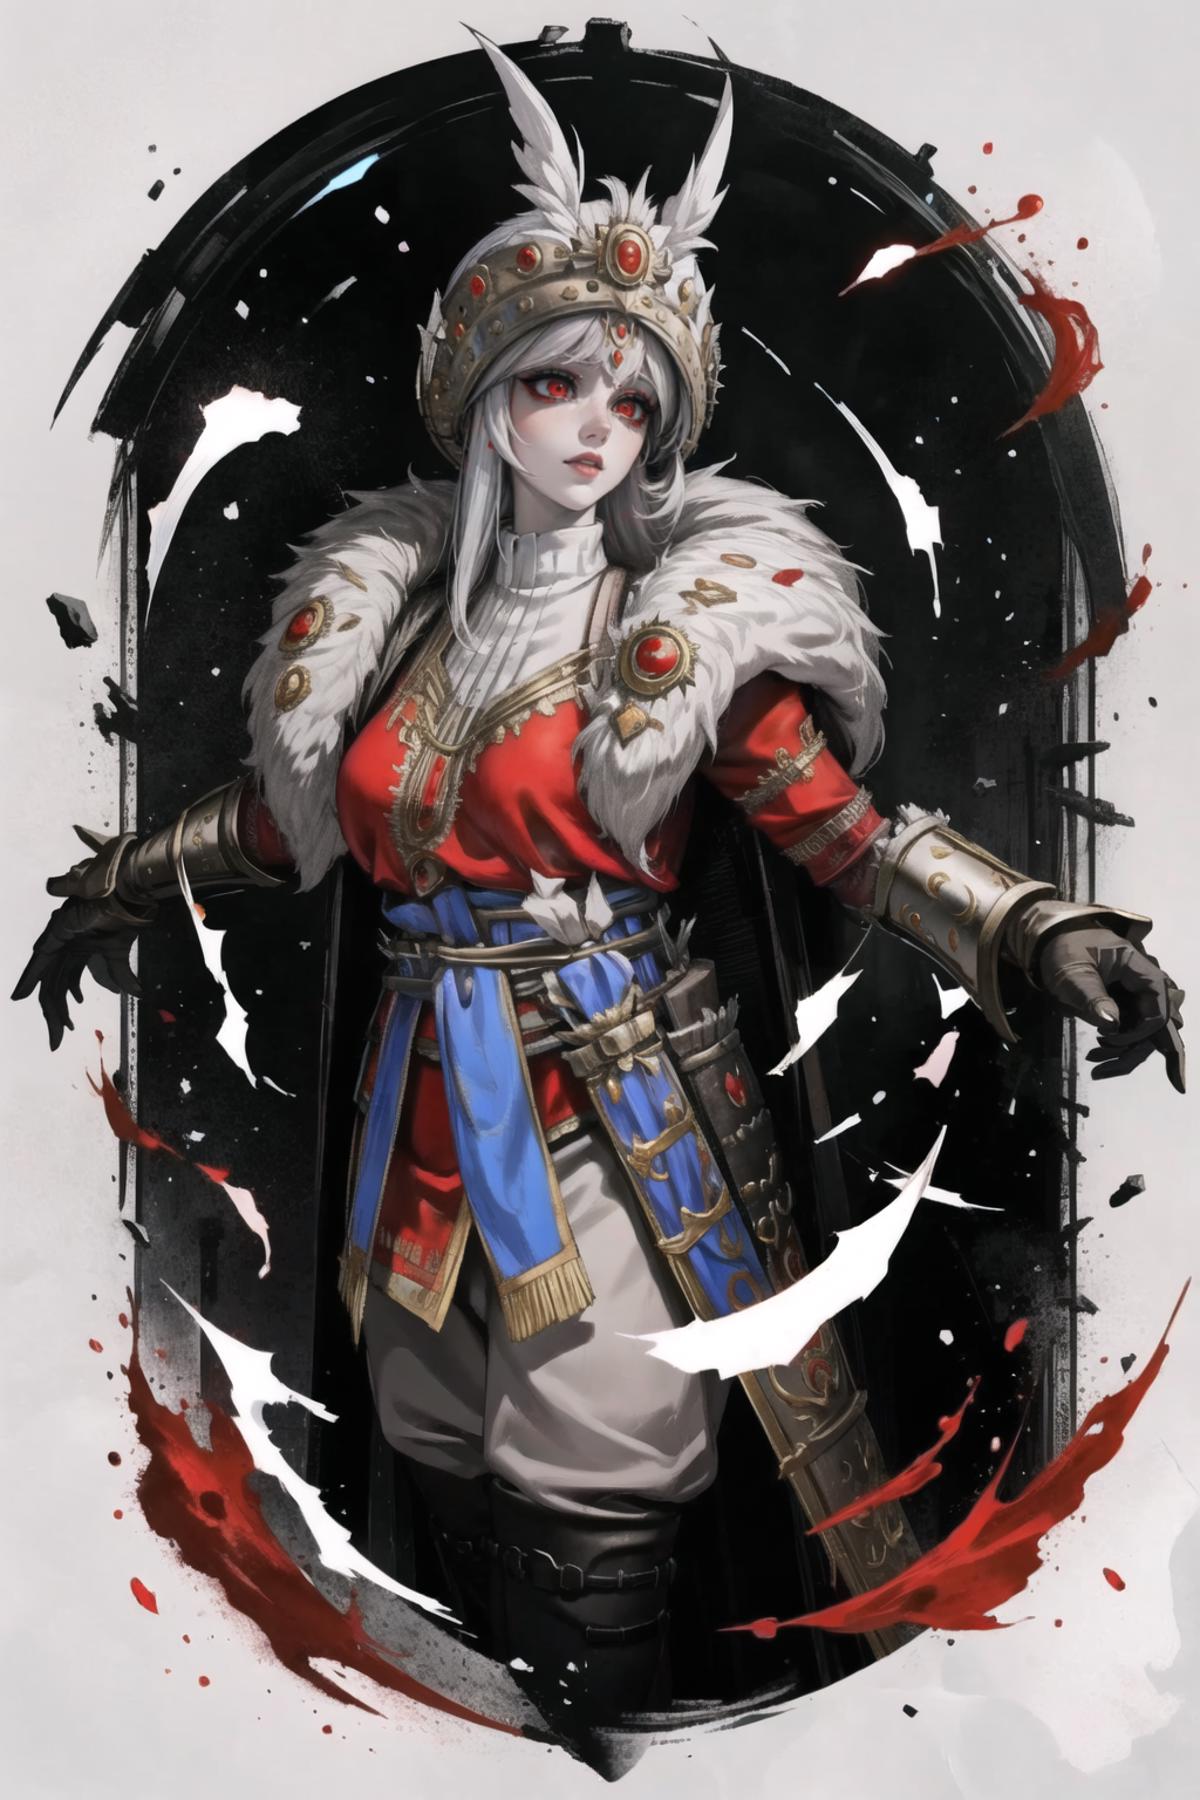 Ulrika Magdova - Warhammer Fantasy image by Fenchurch